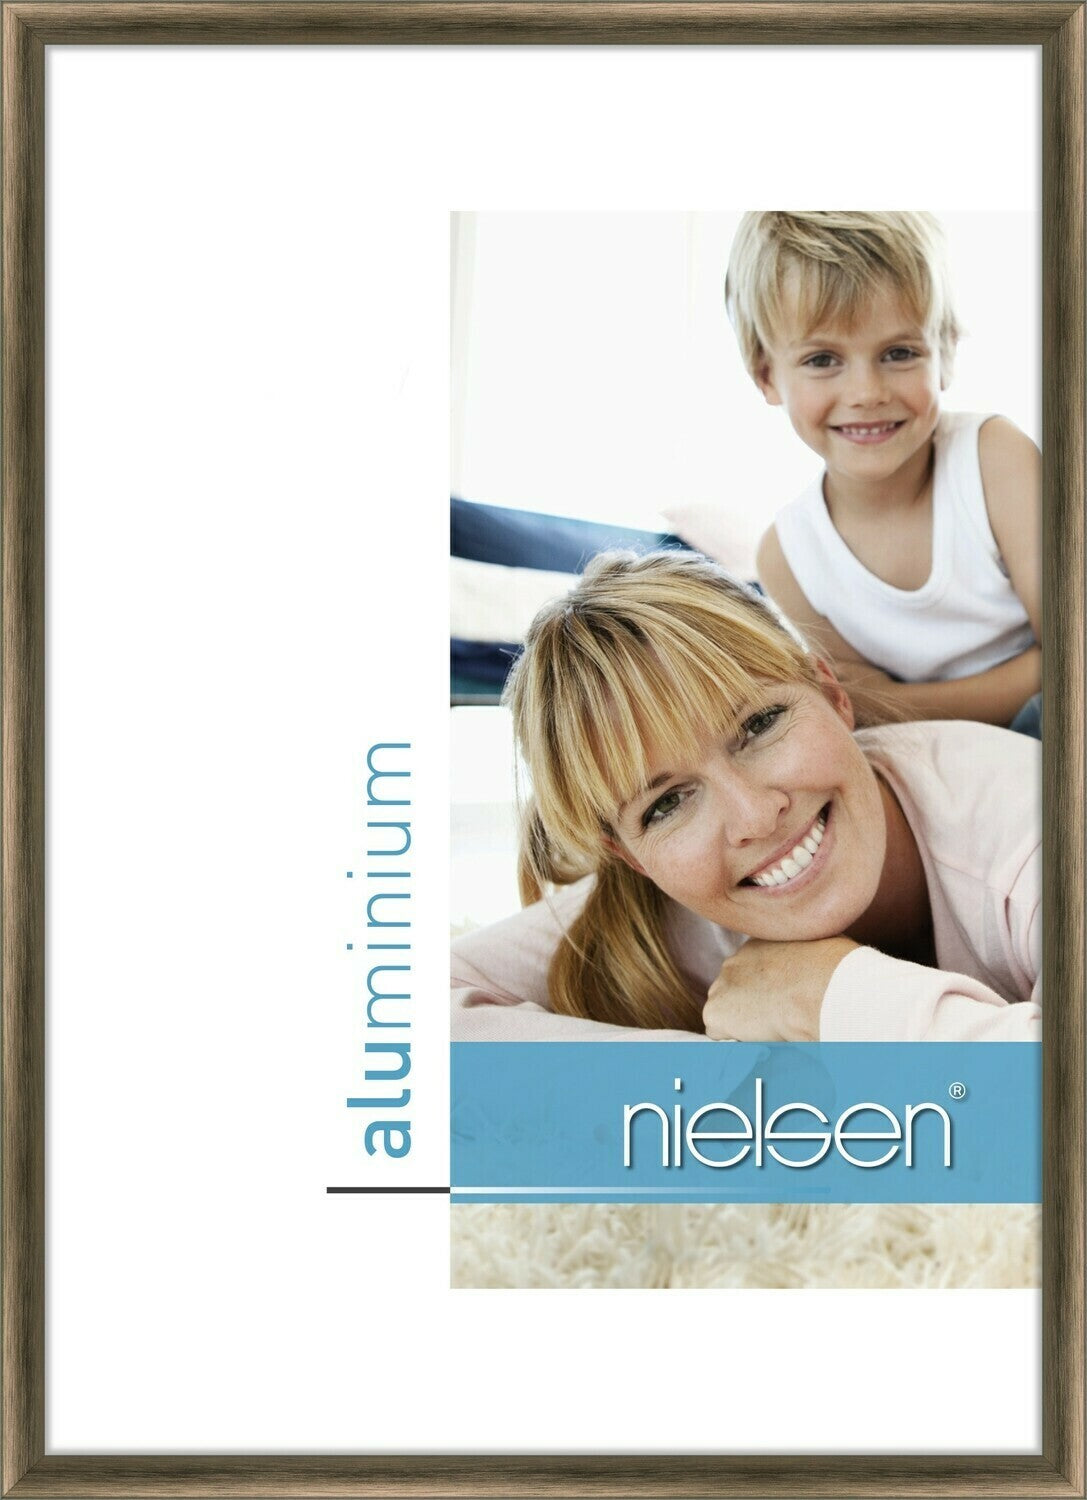 30 x 30cm | Classic Nielsen Frames